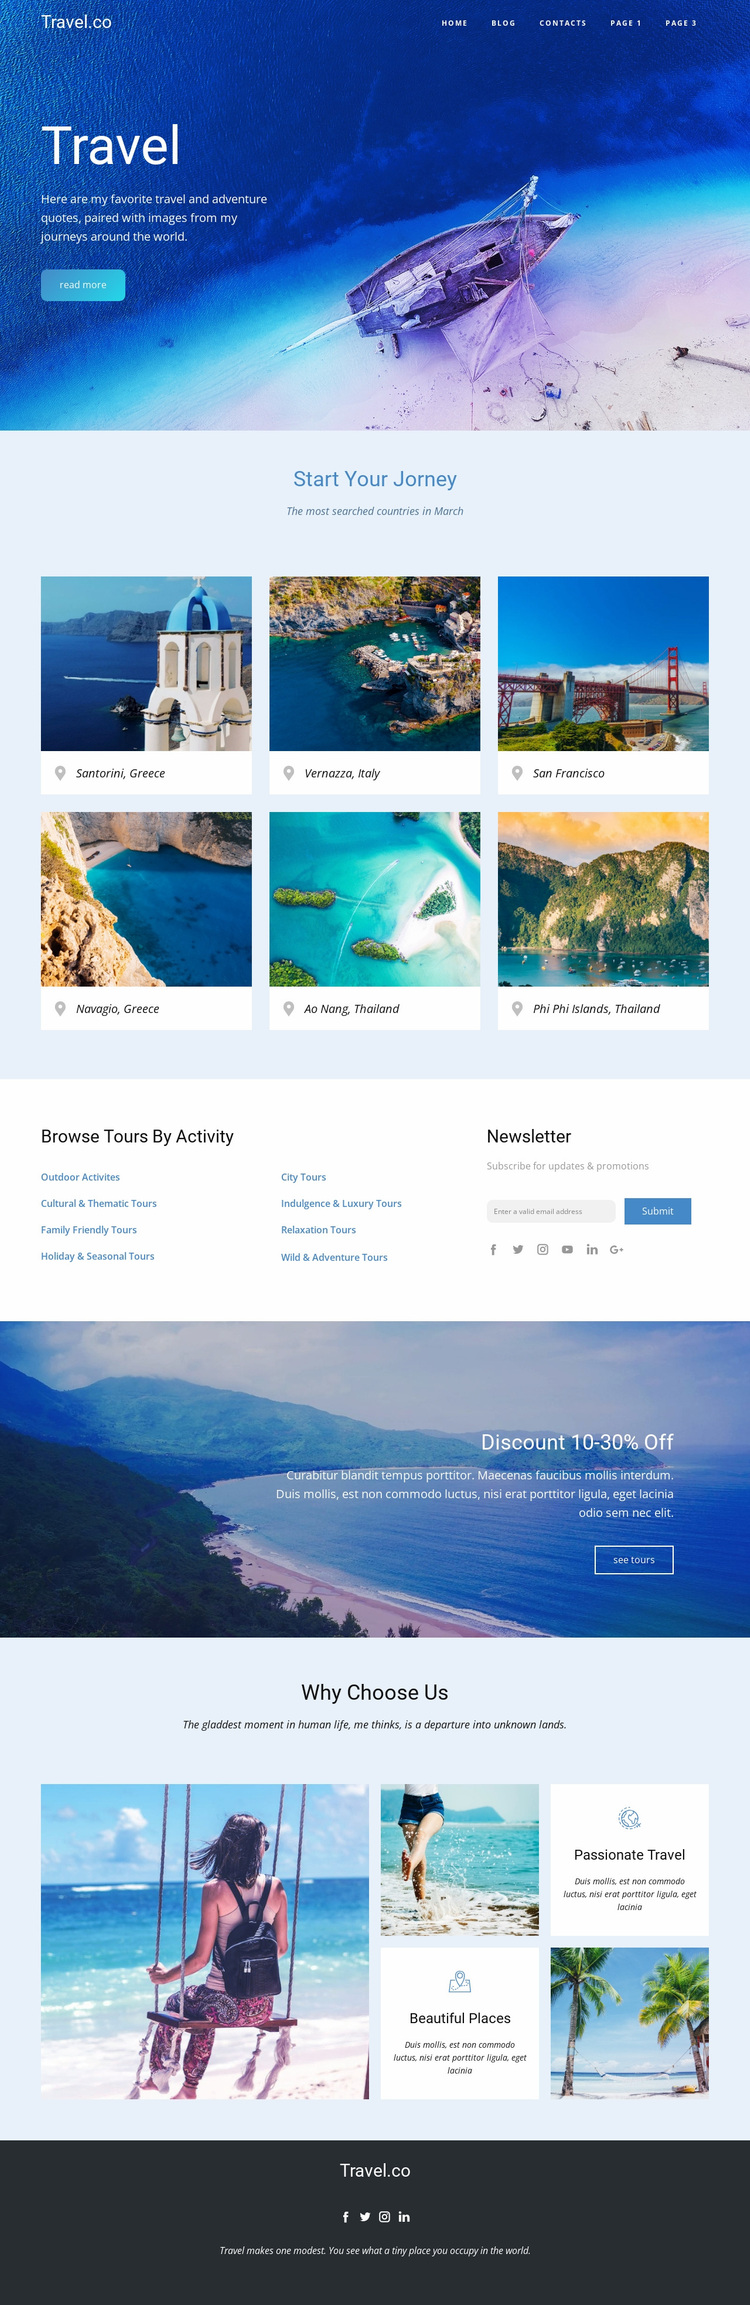 Amazing ideas for travel Website Design